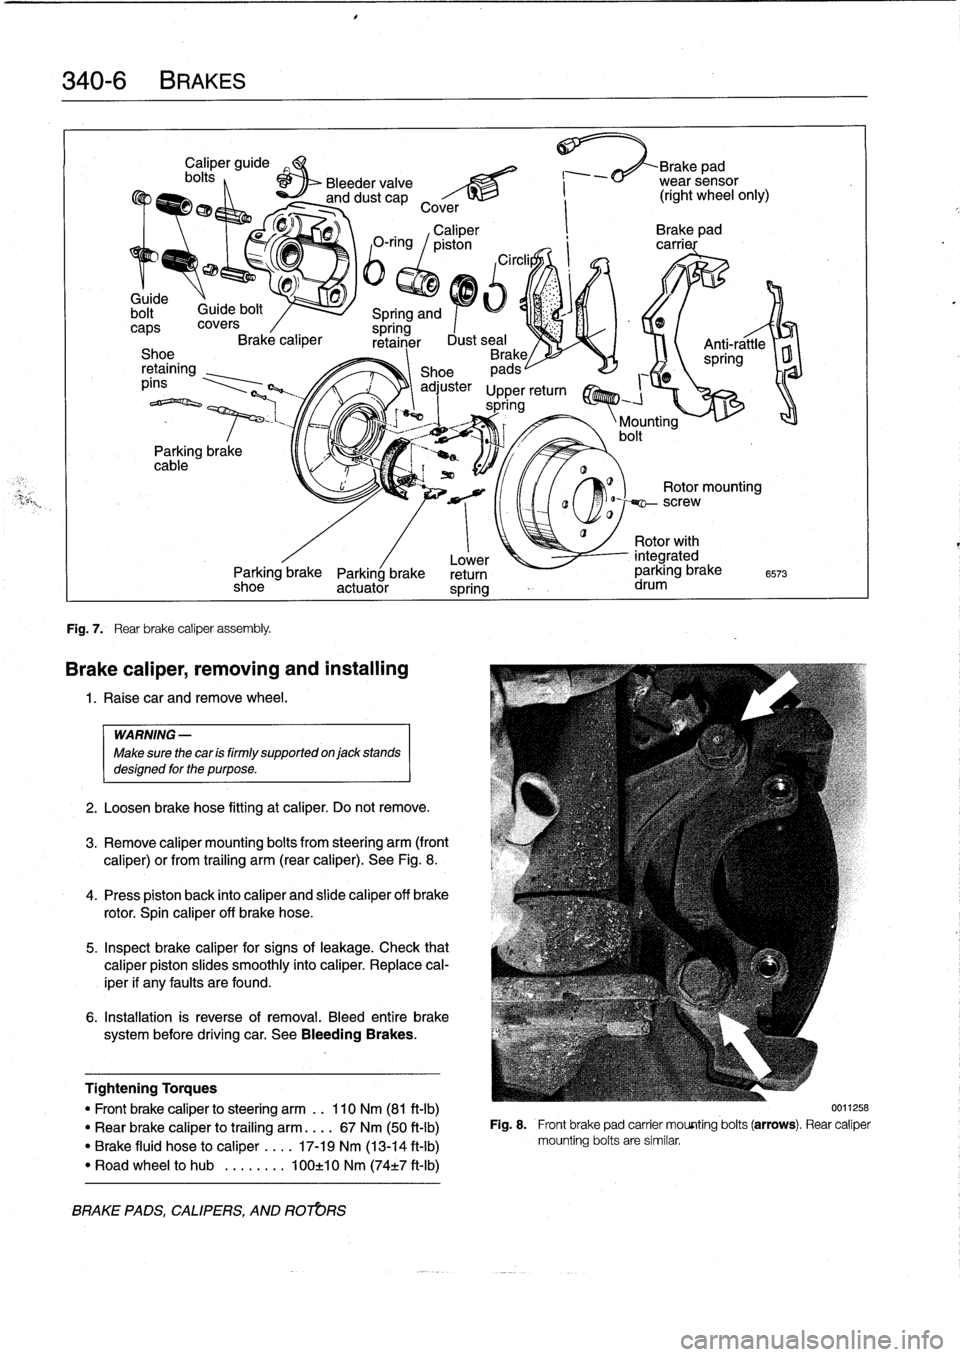 BMW 328i 1994 E36 Owners Manual 
340-
6BRAKES

bolt~

	

Guide
bolt

caps
covers
Brake
caliper
Shoe
retaining
píns

Parking
brake
cable

Fig
.
7
.

	

Rear
brake
caliper
assembly
.

Caliper
guide

	

Brake

	

ad
bolts
,

	

Bleede